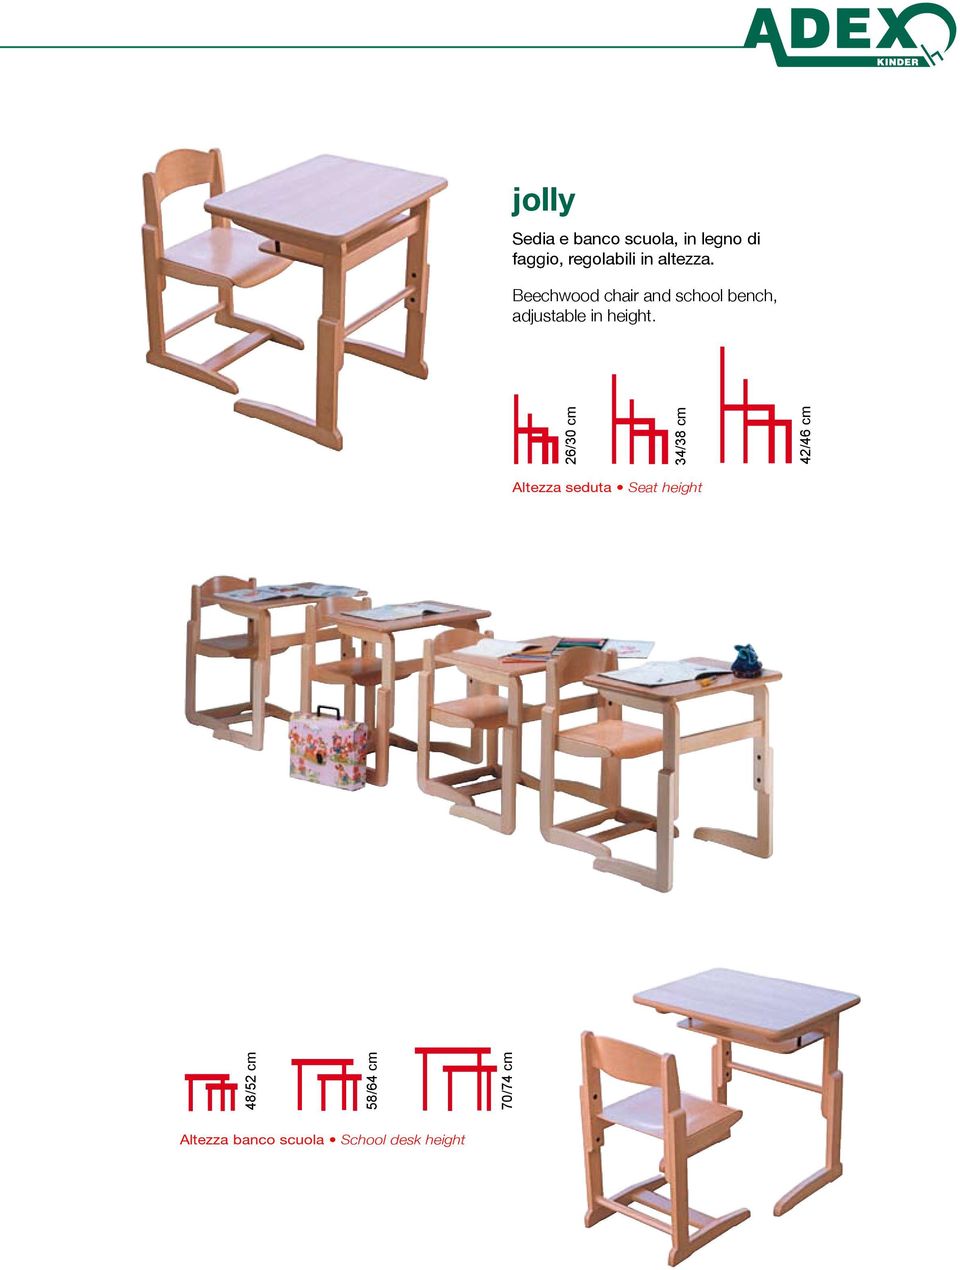 Beechwood chair and school bench, adjustable in